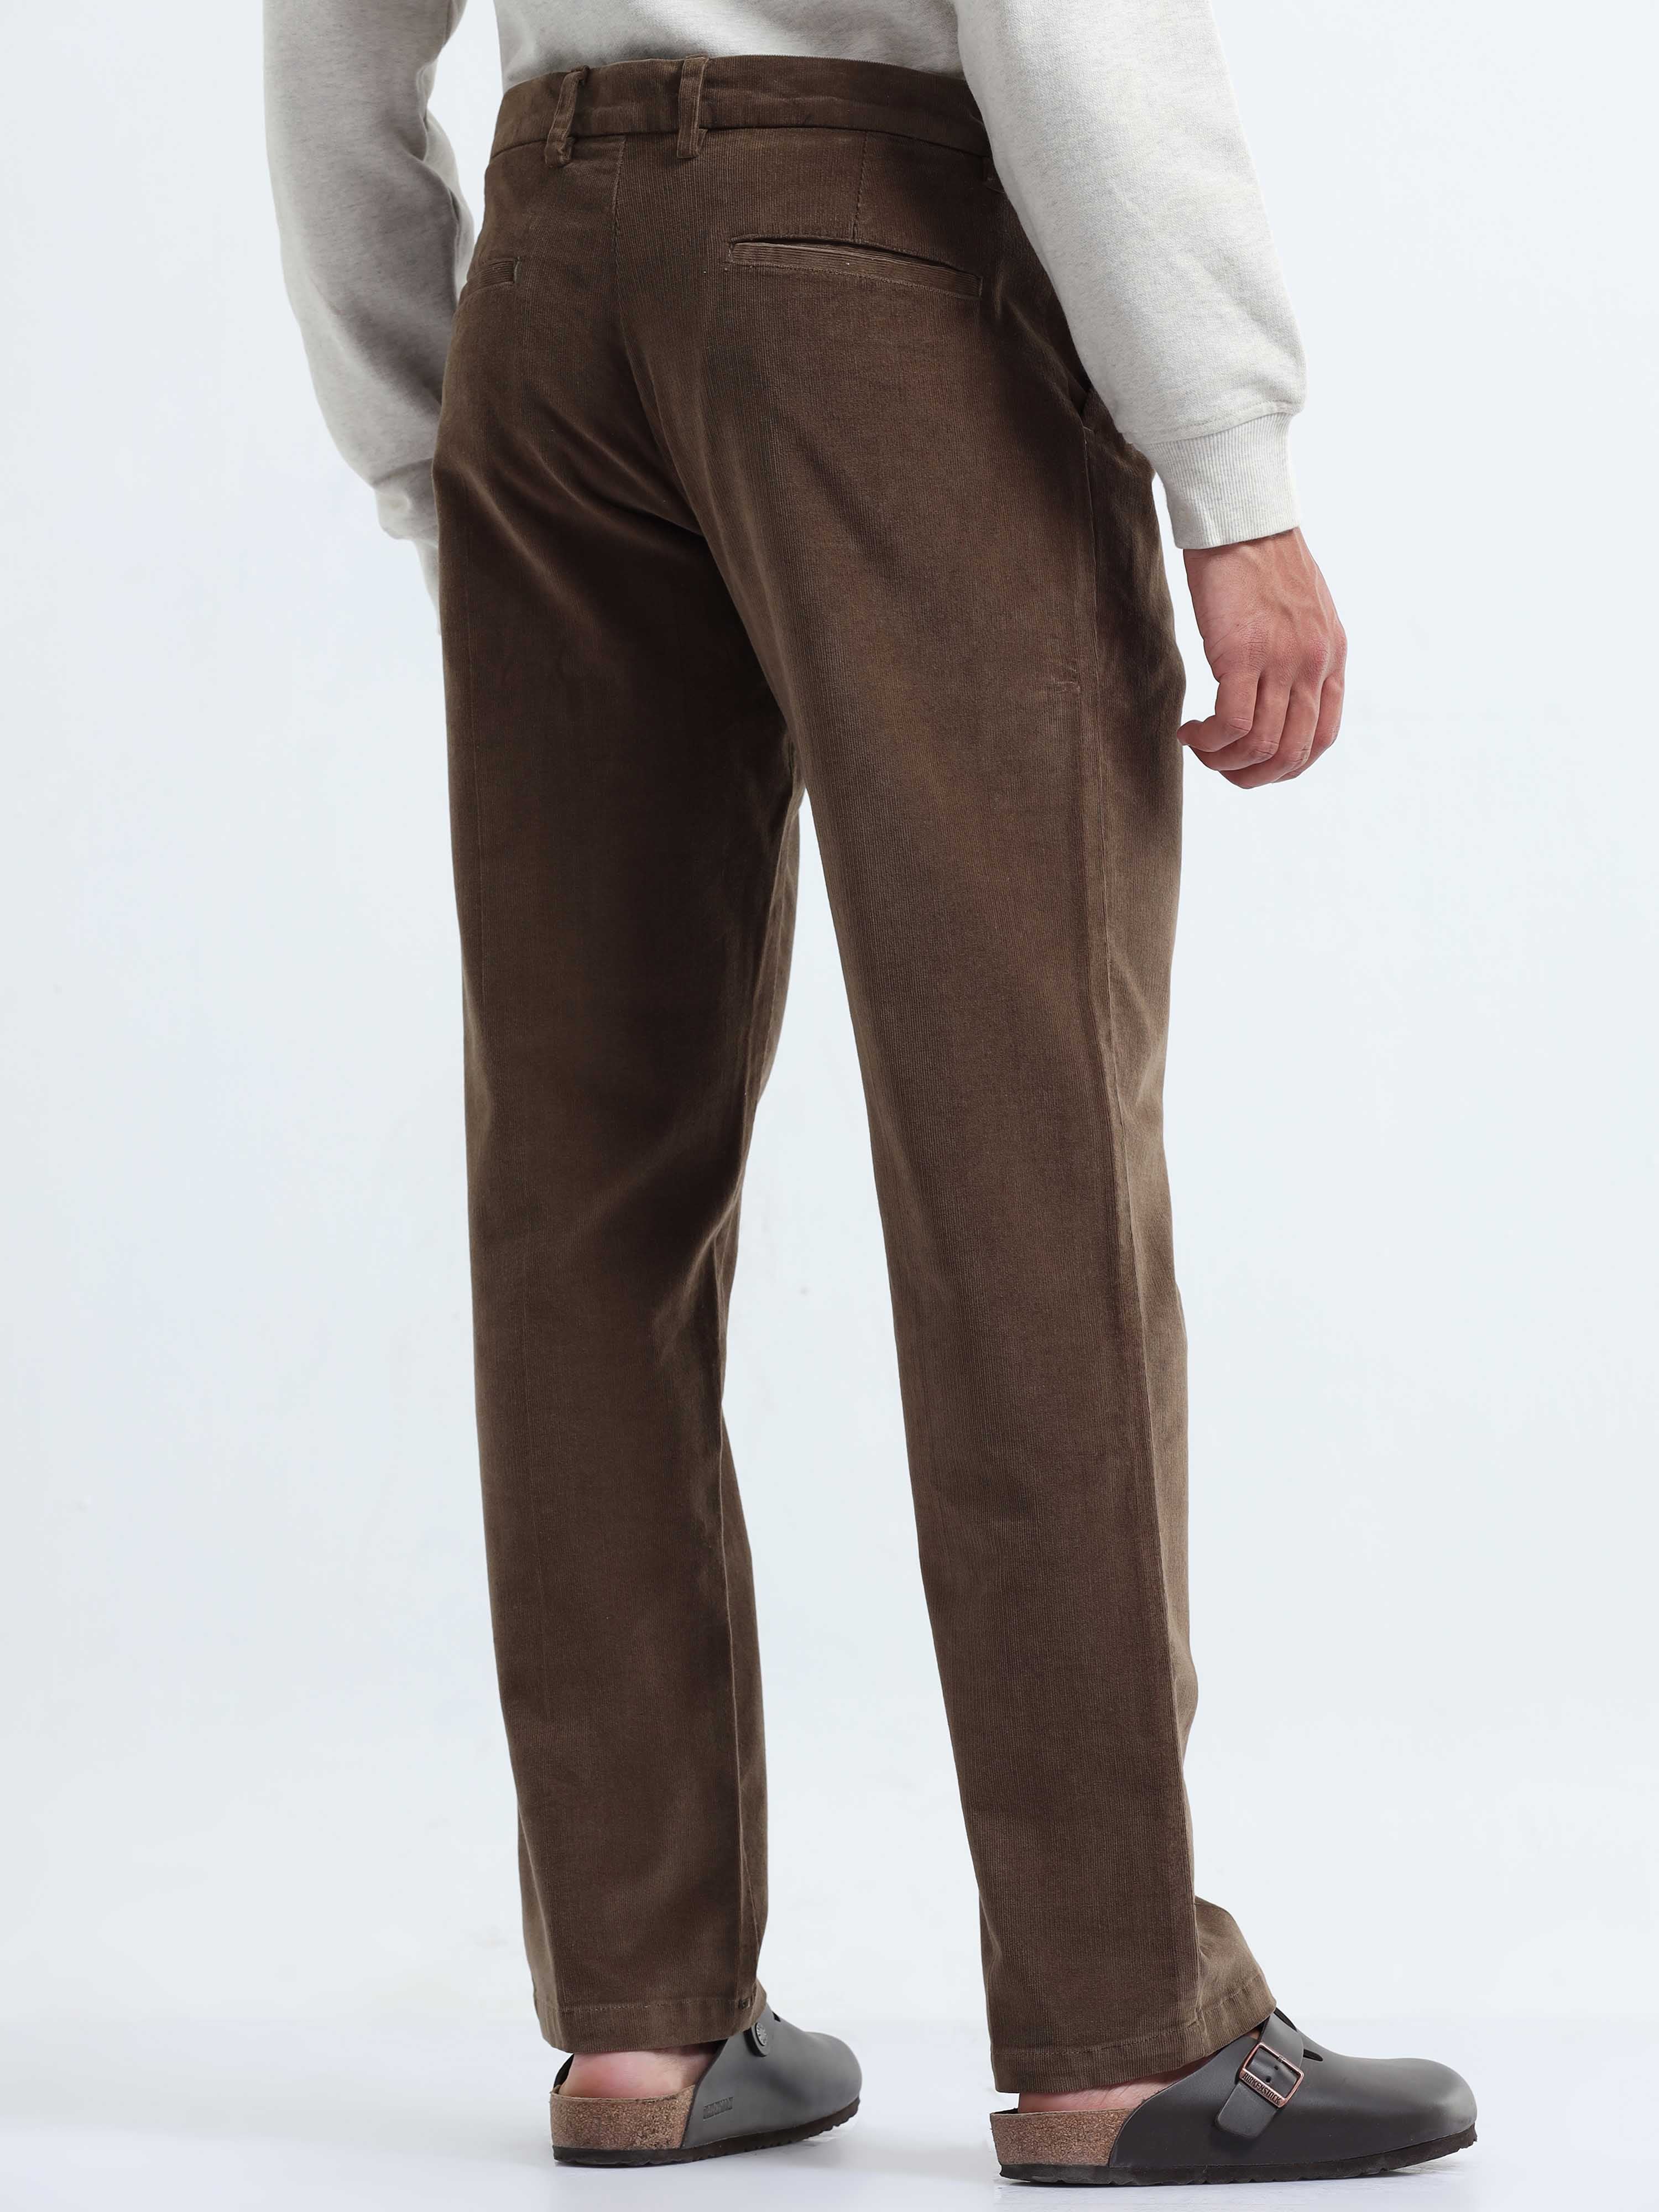 Oak Olive Corduroy Pants for Men